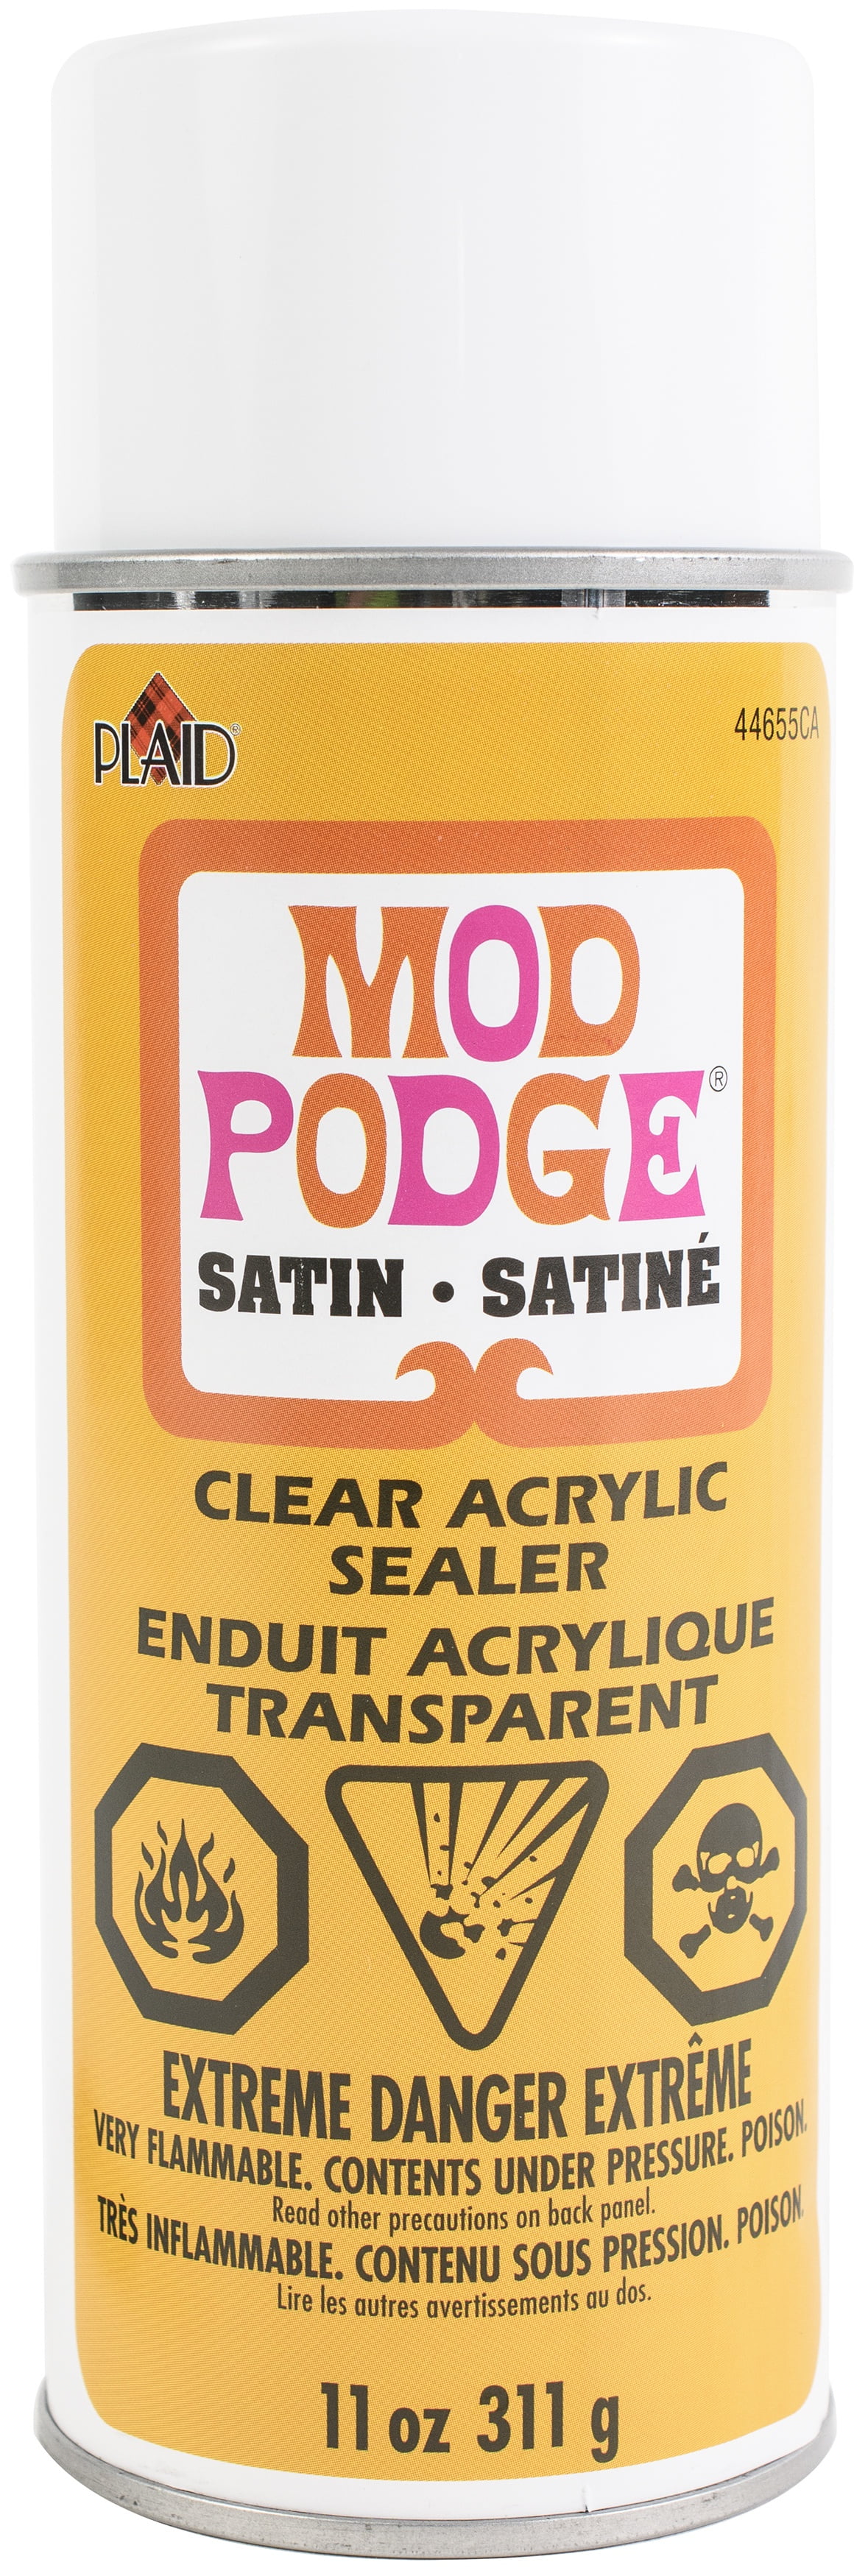 Mod Podge Satin Acrylic Sealer-11 Oz - 028995446559